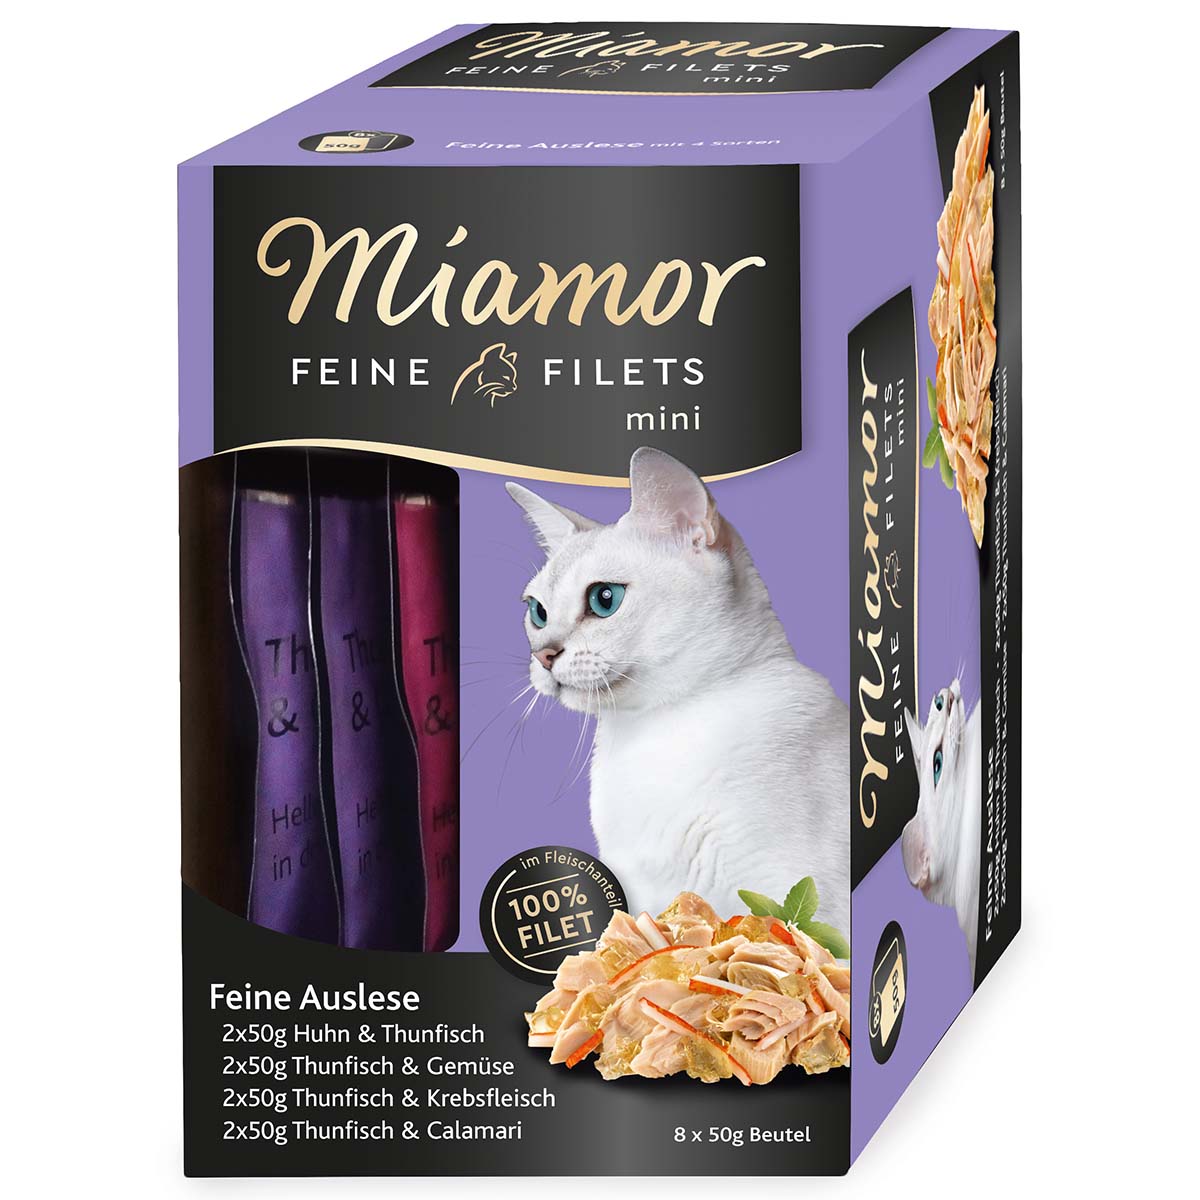 miamor feine filets mini multibox feine auslese